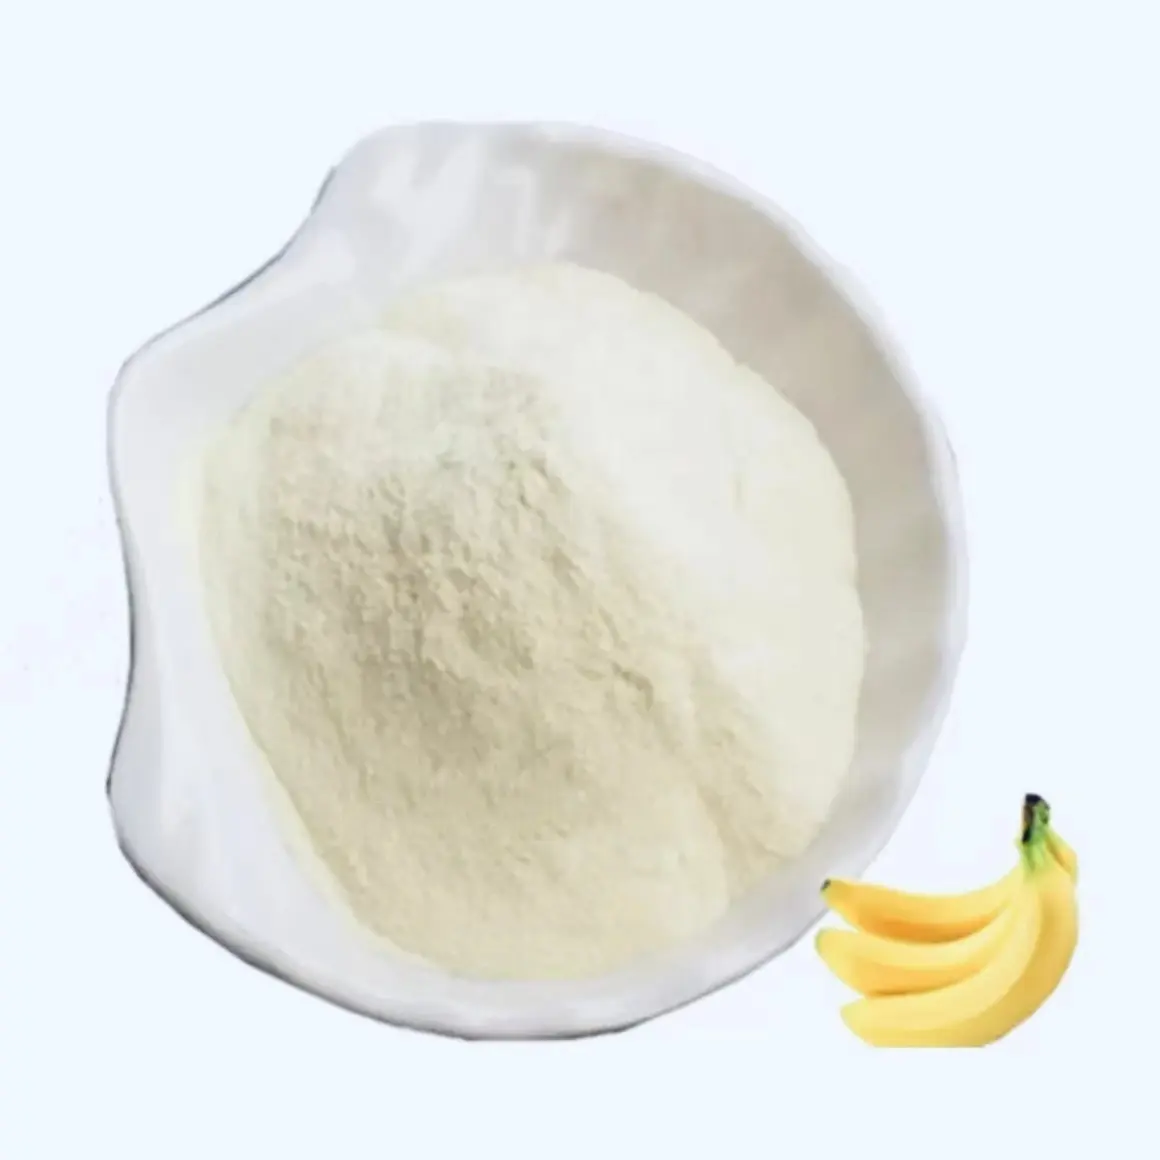 Ningherbバナナジュースパウダー卸売バルク食品グレードバナナパウダー